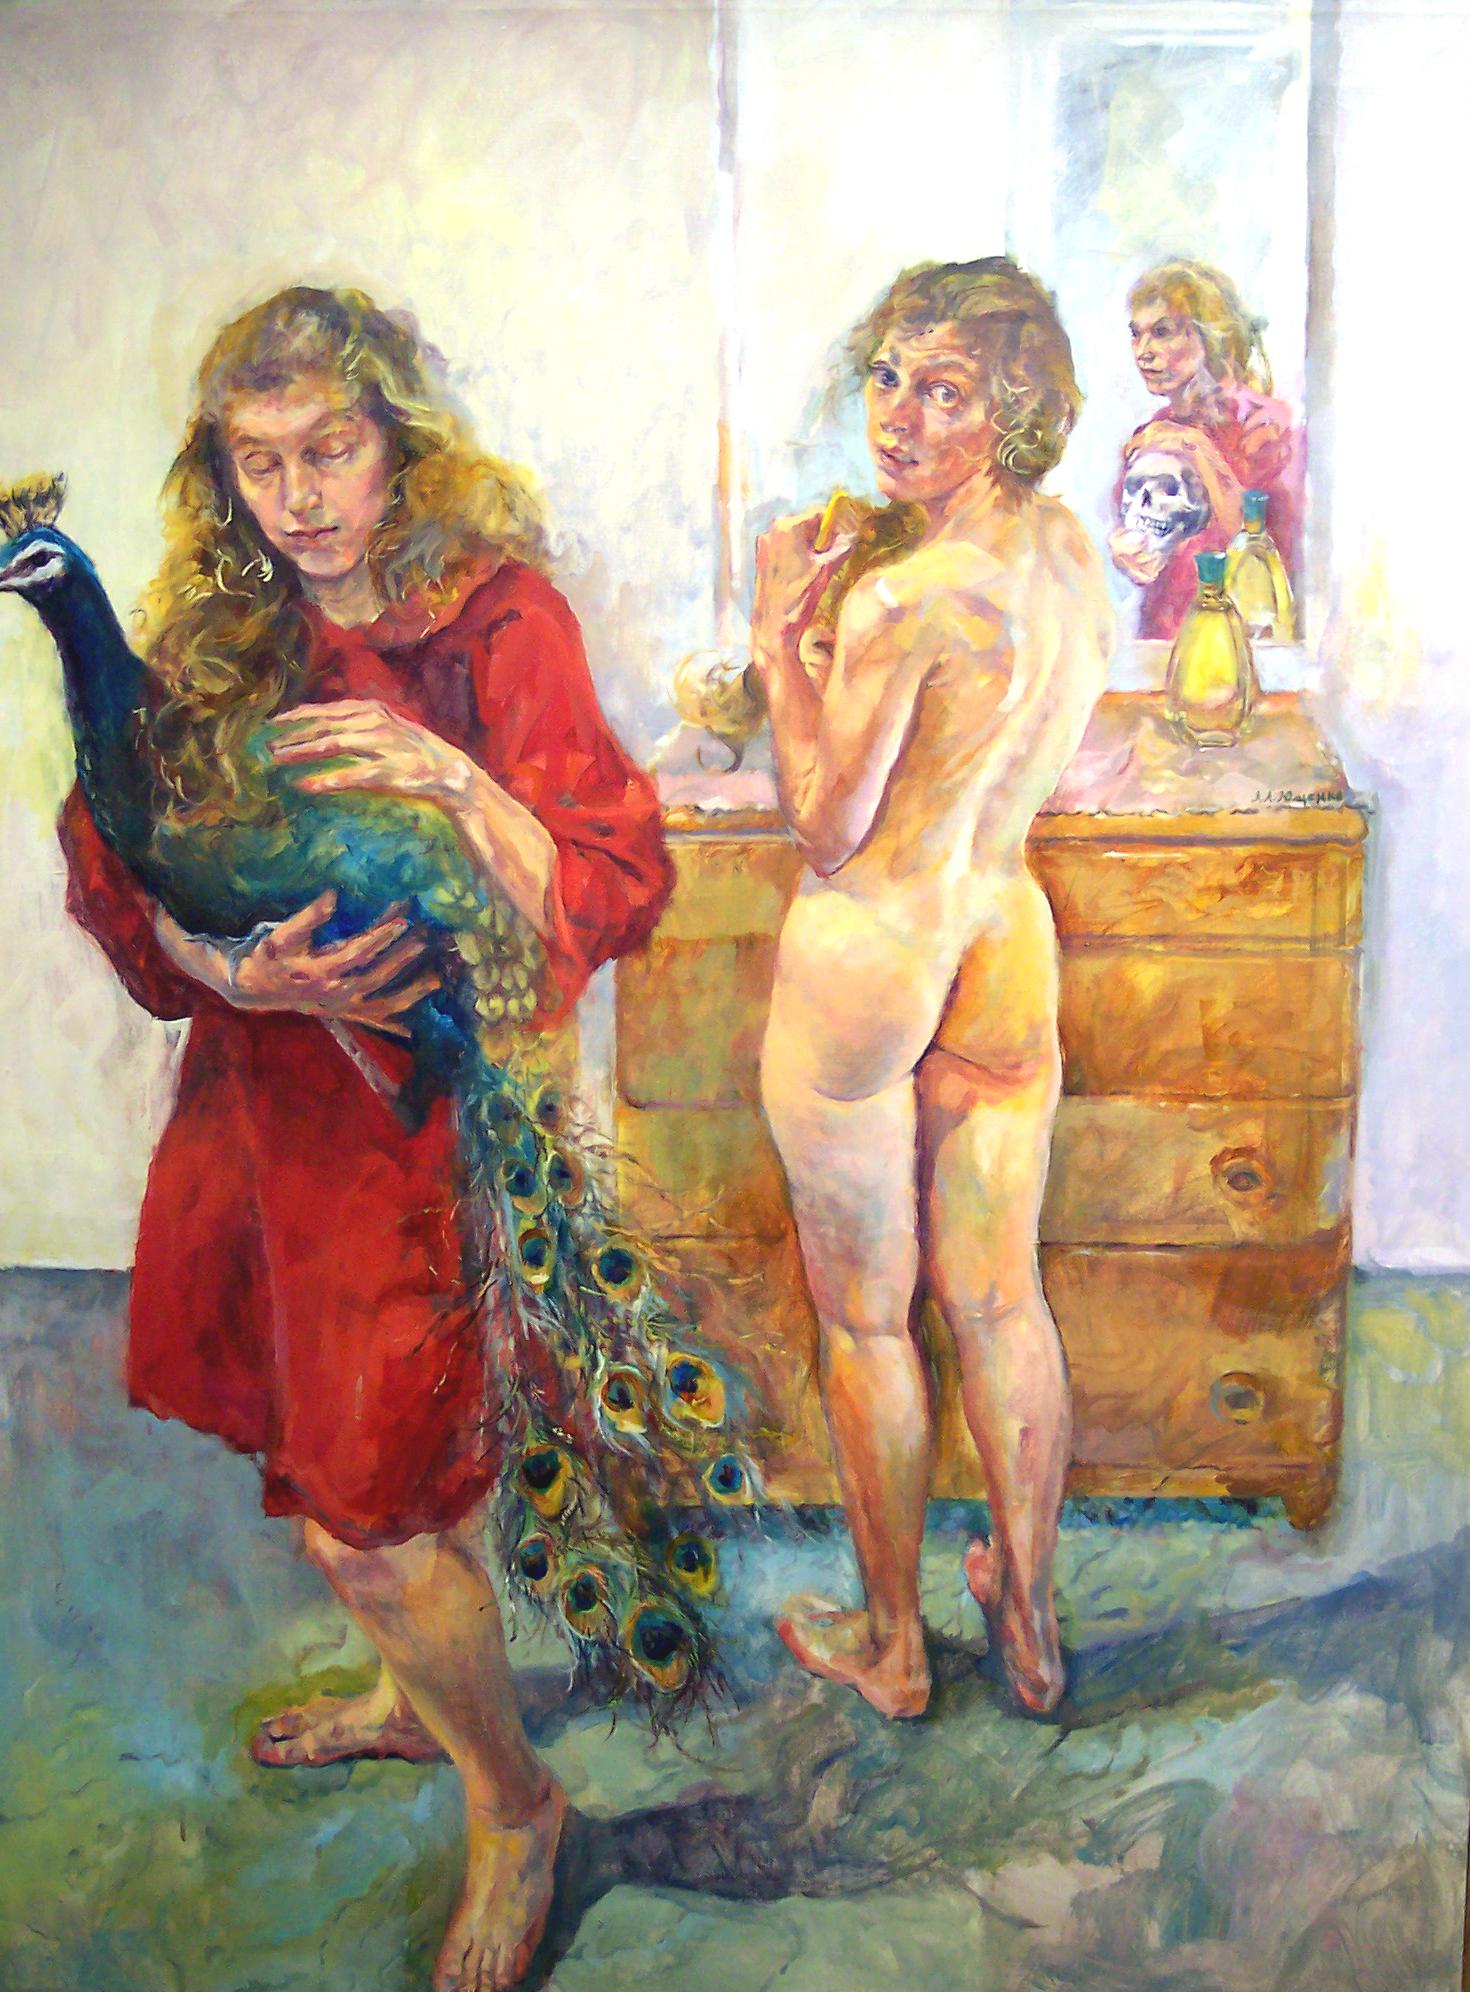 Audrey Ushenko Portrait Painting - Vanitas IV : artwork in the genre of narrative realism